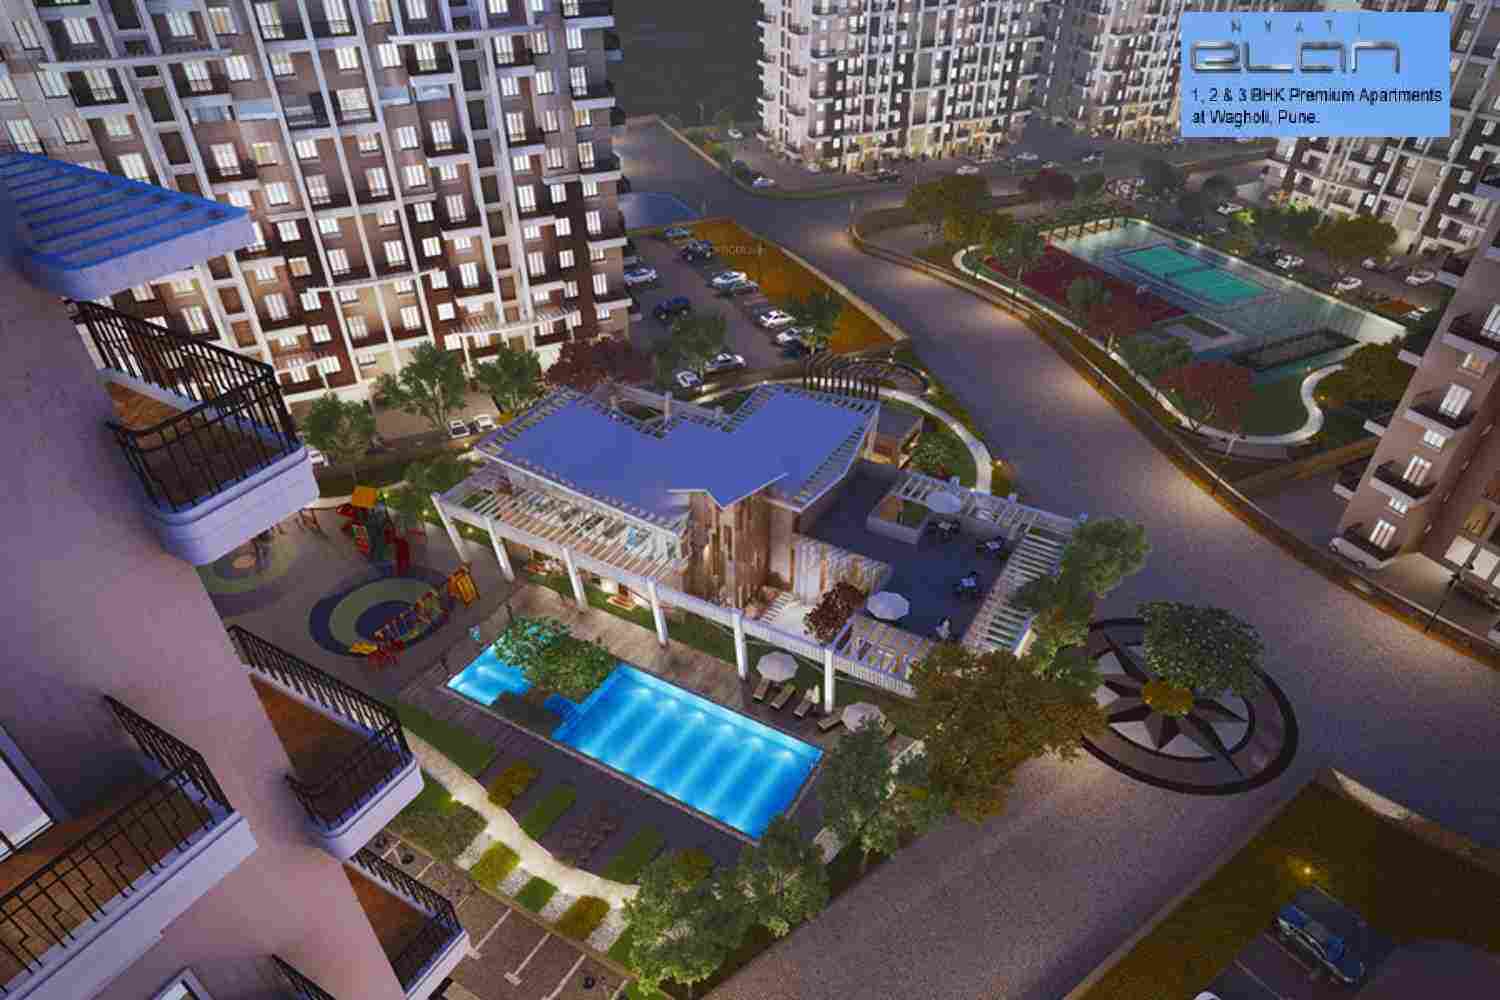 Nyati Elan launches 1, 2 and 3 bhk premium apartments at Wagholi, Pune